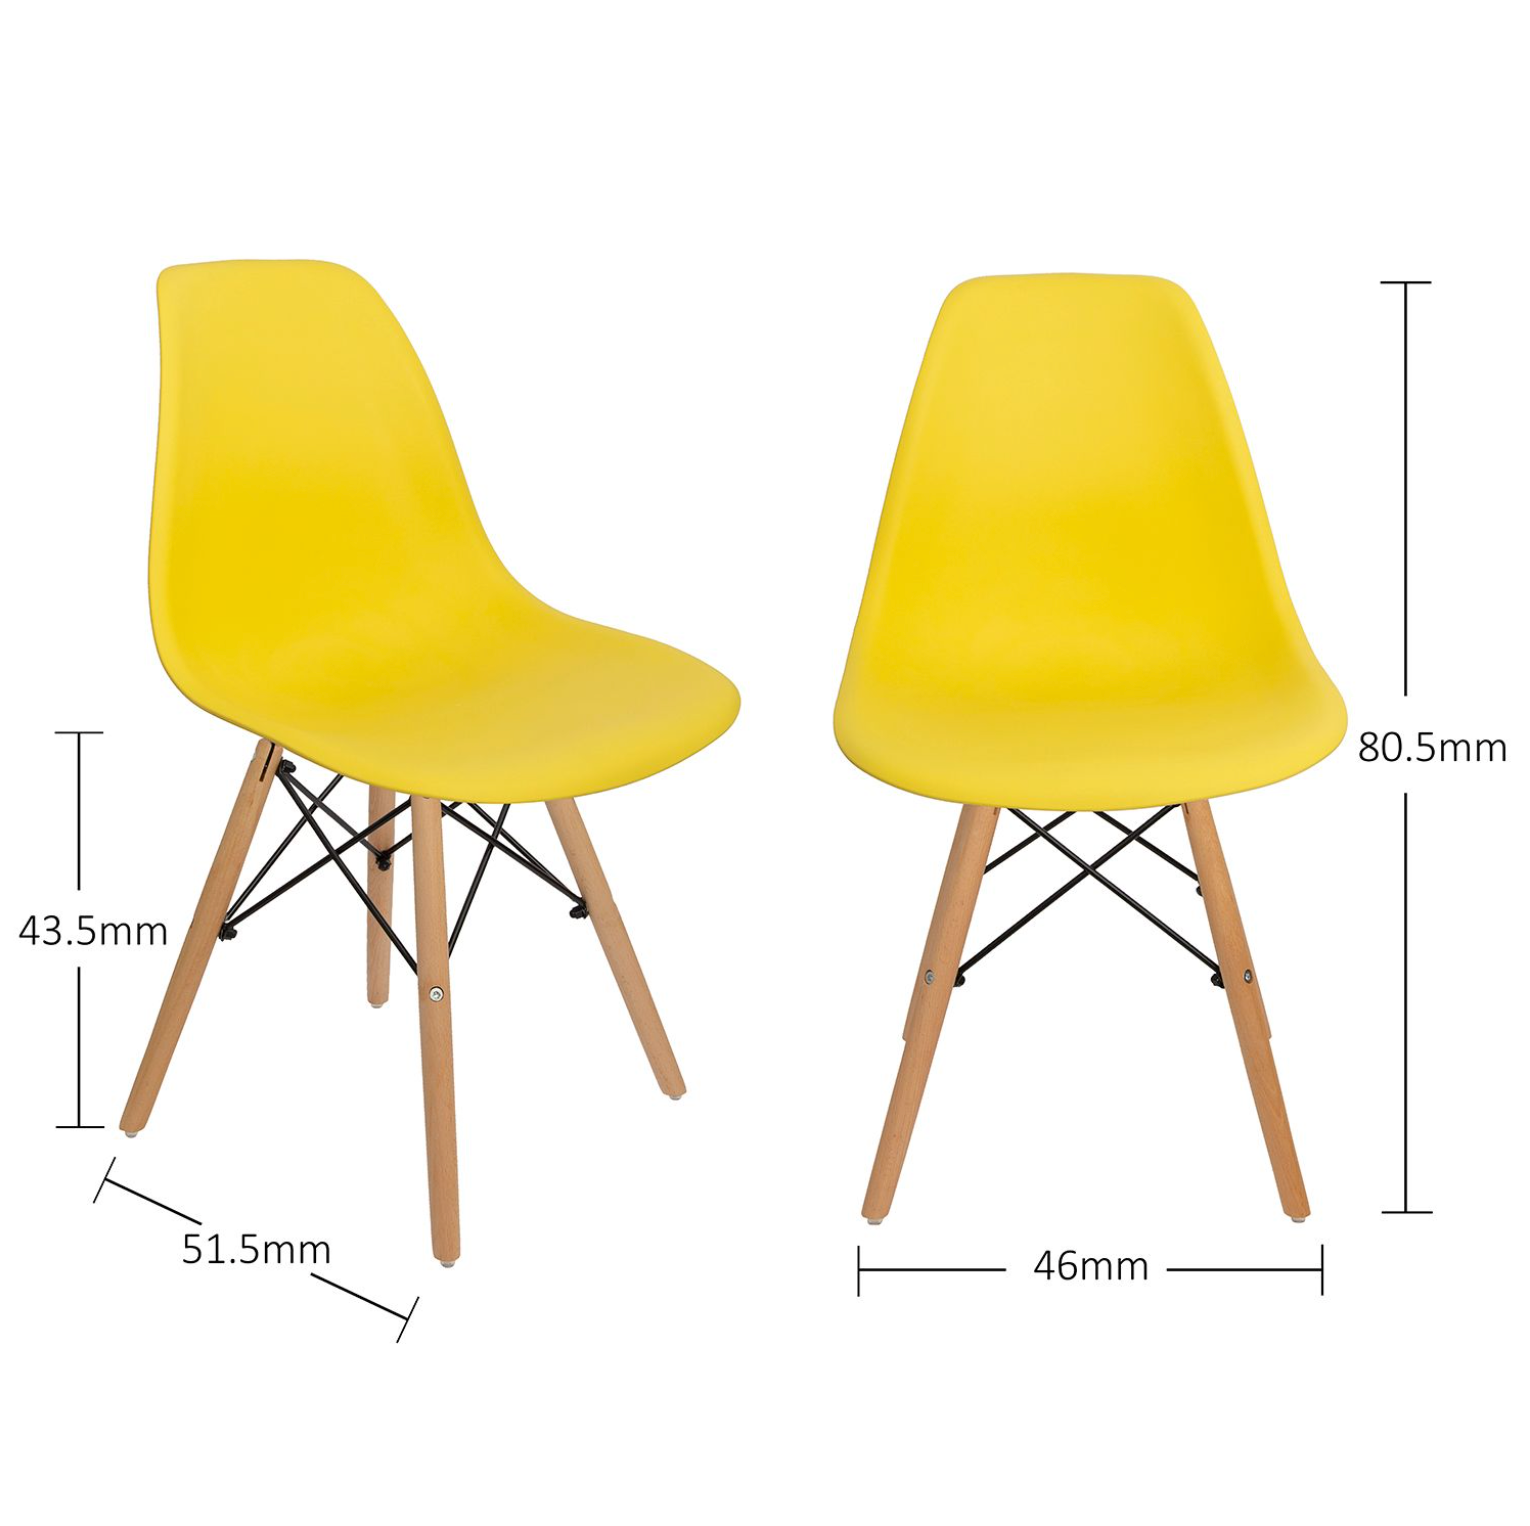 Como Retro Style Dining Chair - Yellow Bravich LTD.